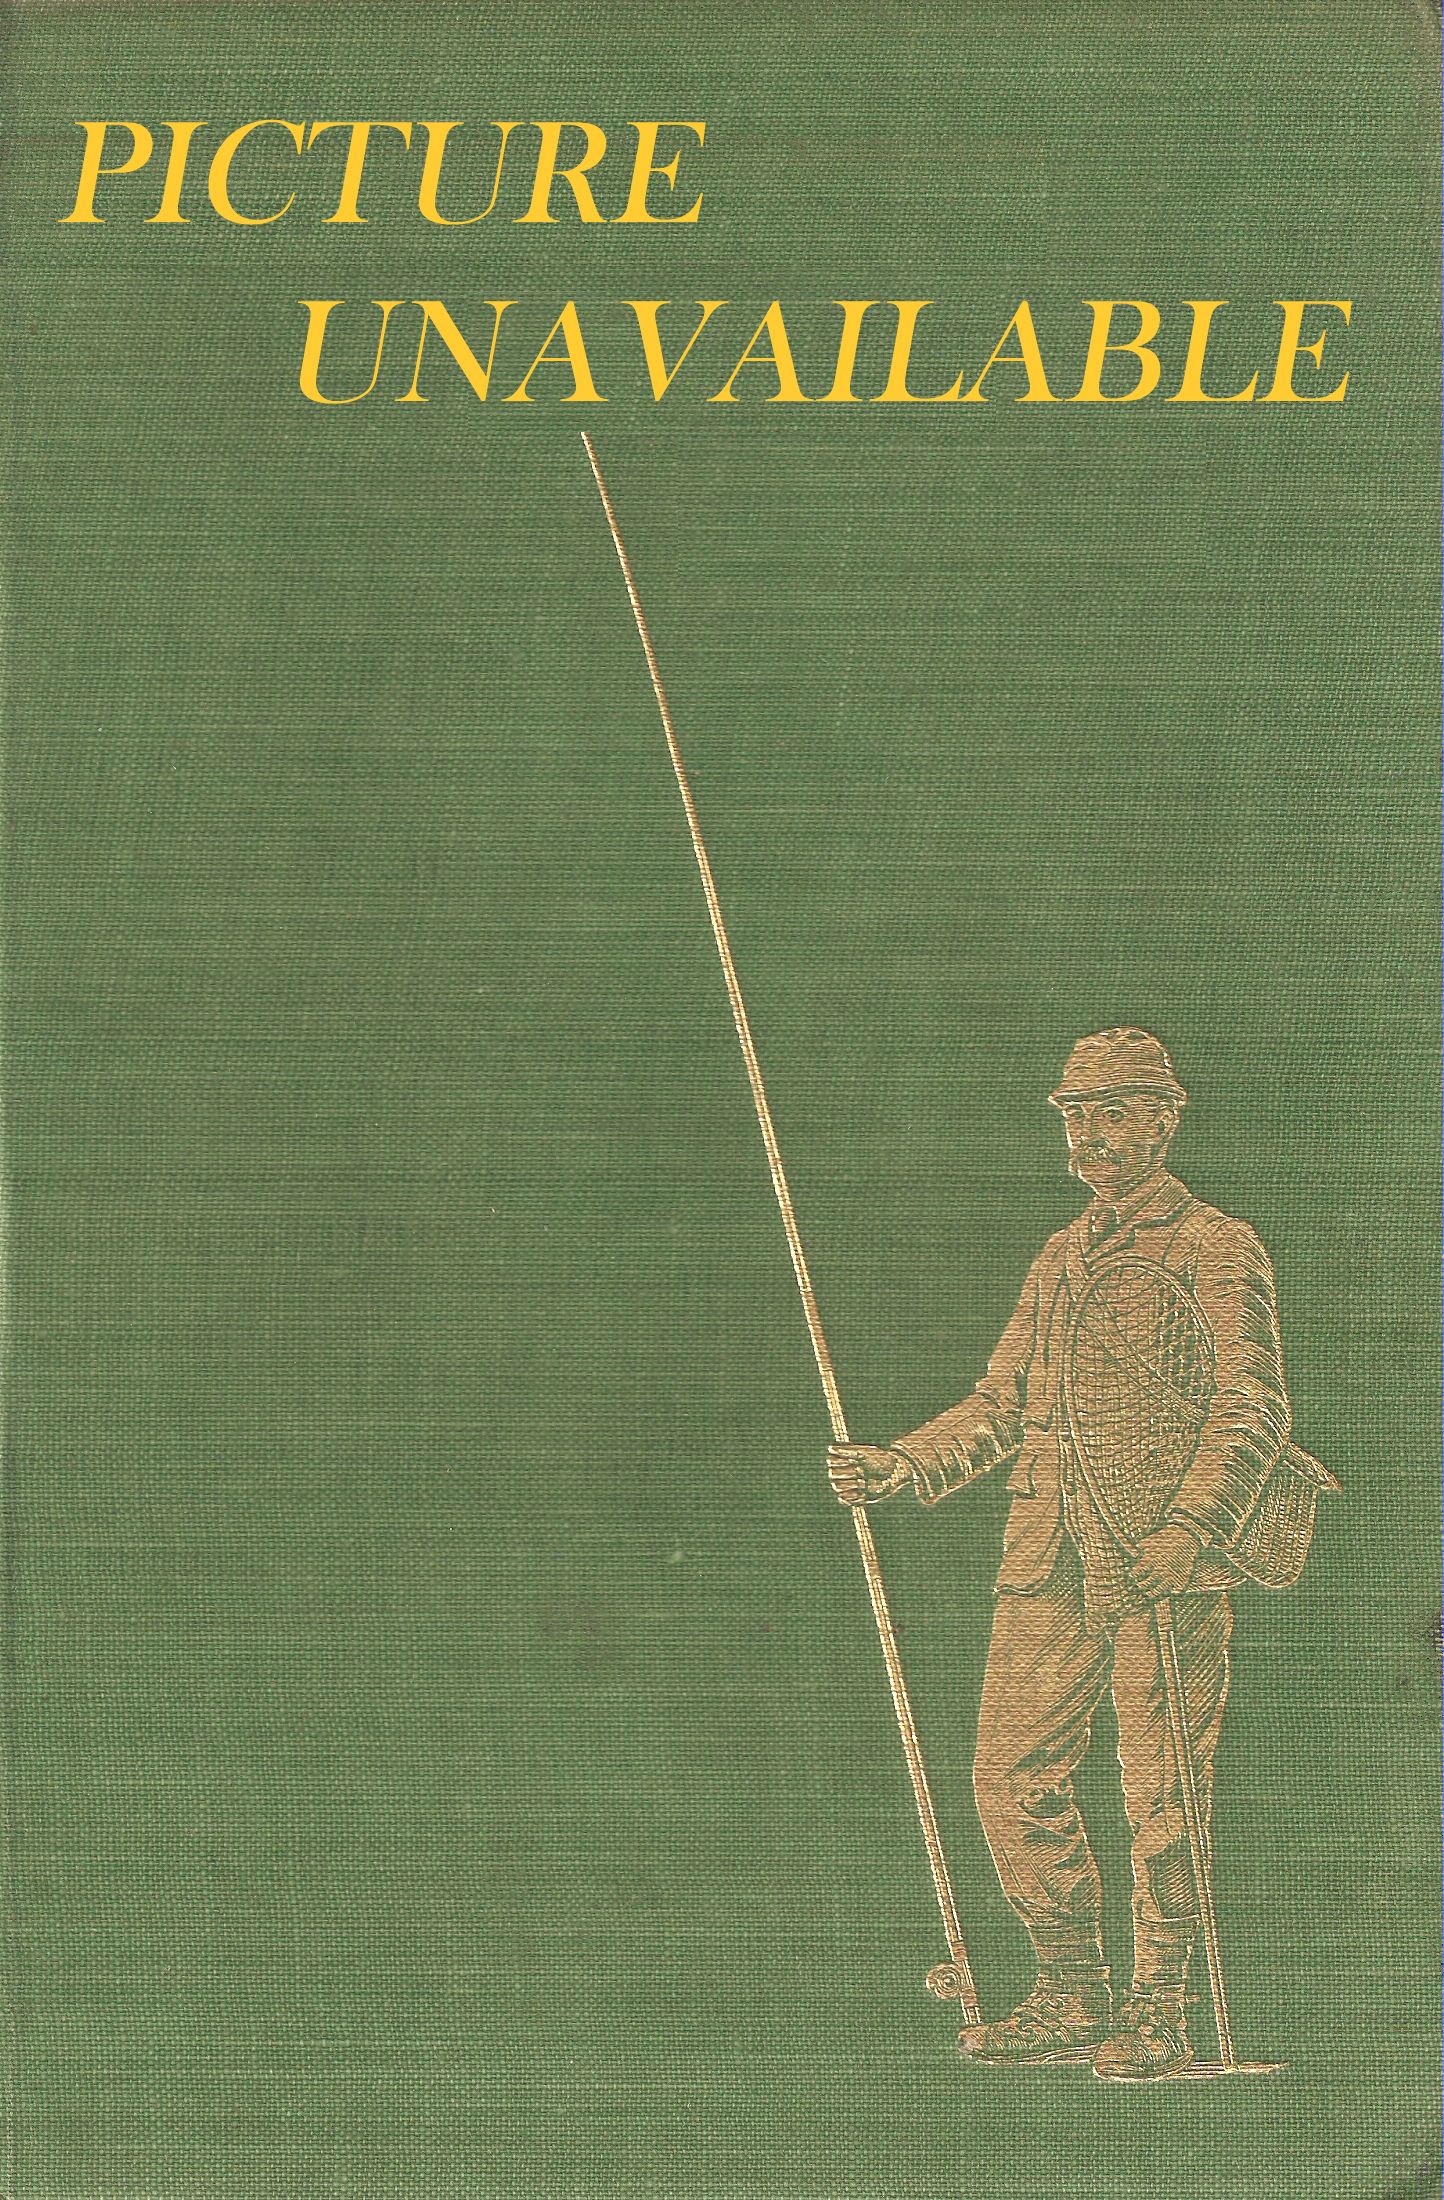 CREEL: A FISHING MAGAZINE. Volume 2, number 5. November 1964.